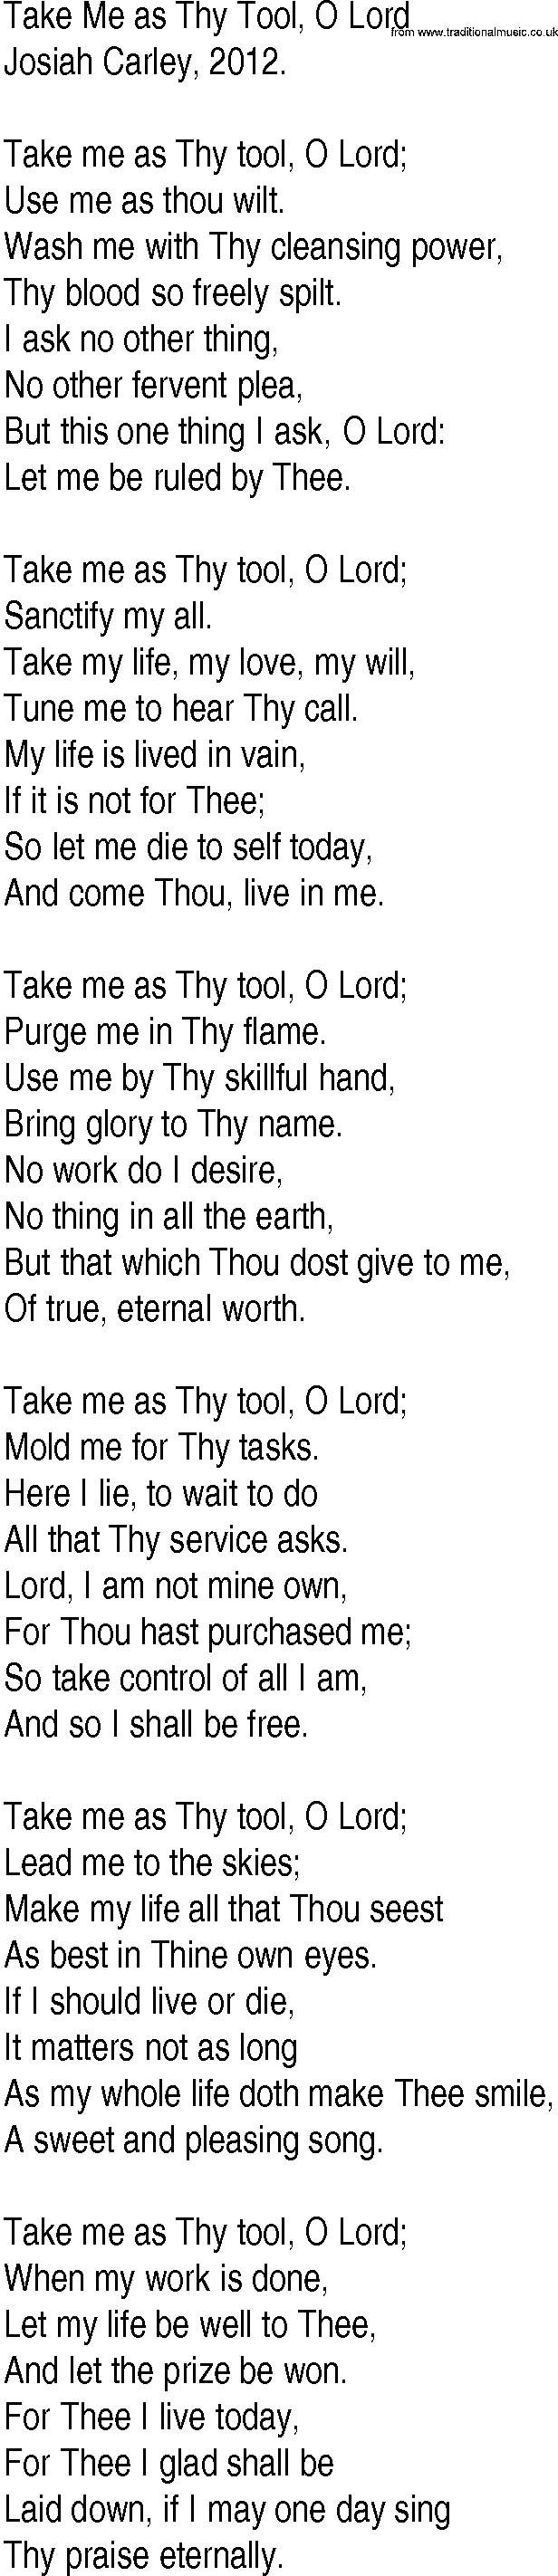 Hymn and Gospel Song: Take Me as Thy Tool, O Lord by Josiah Carley lyrics